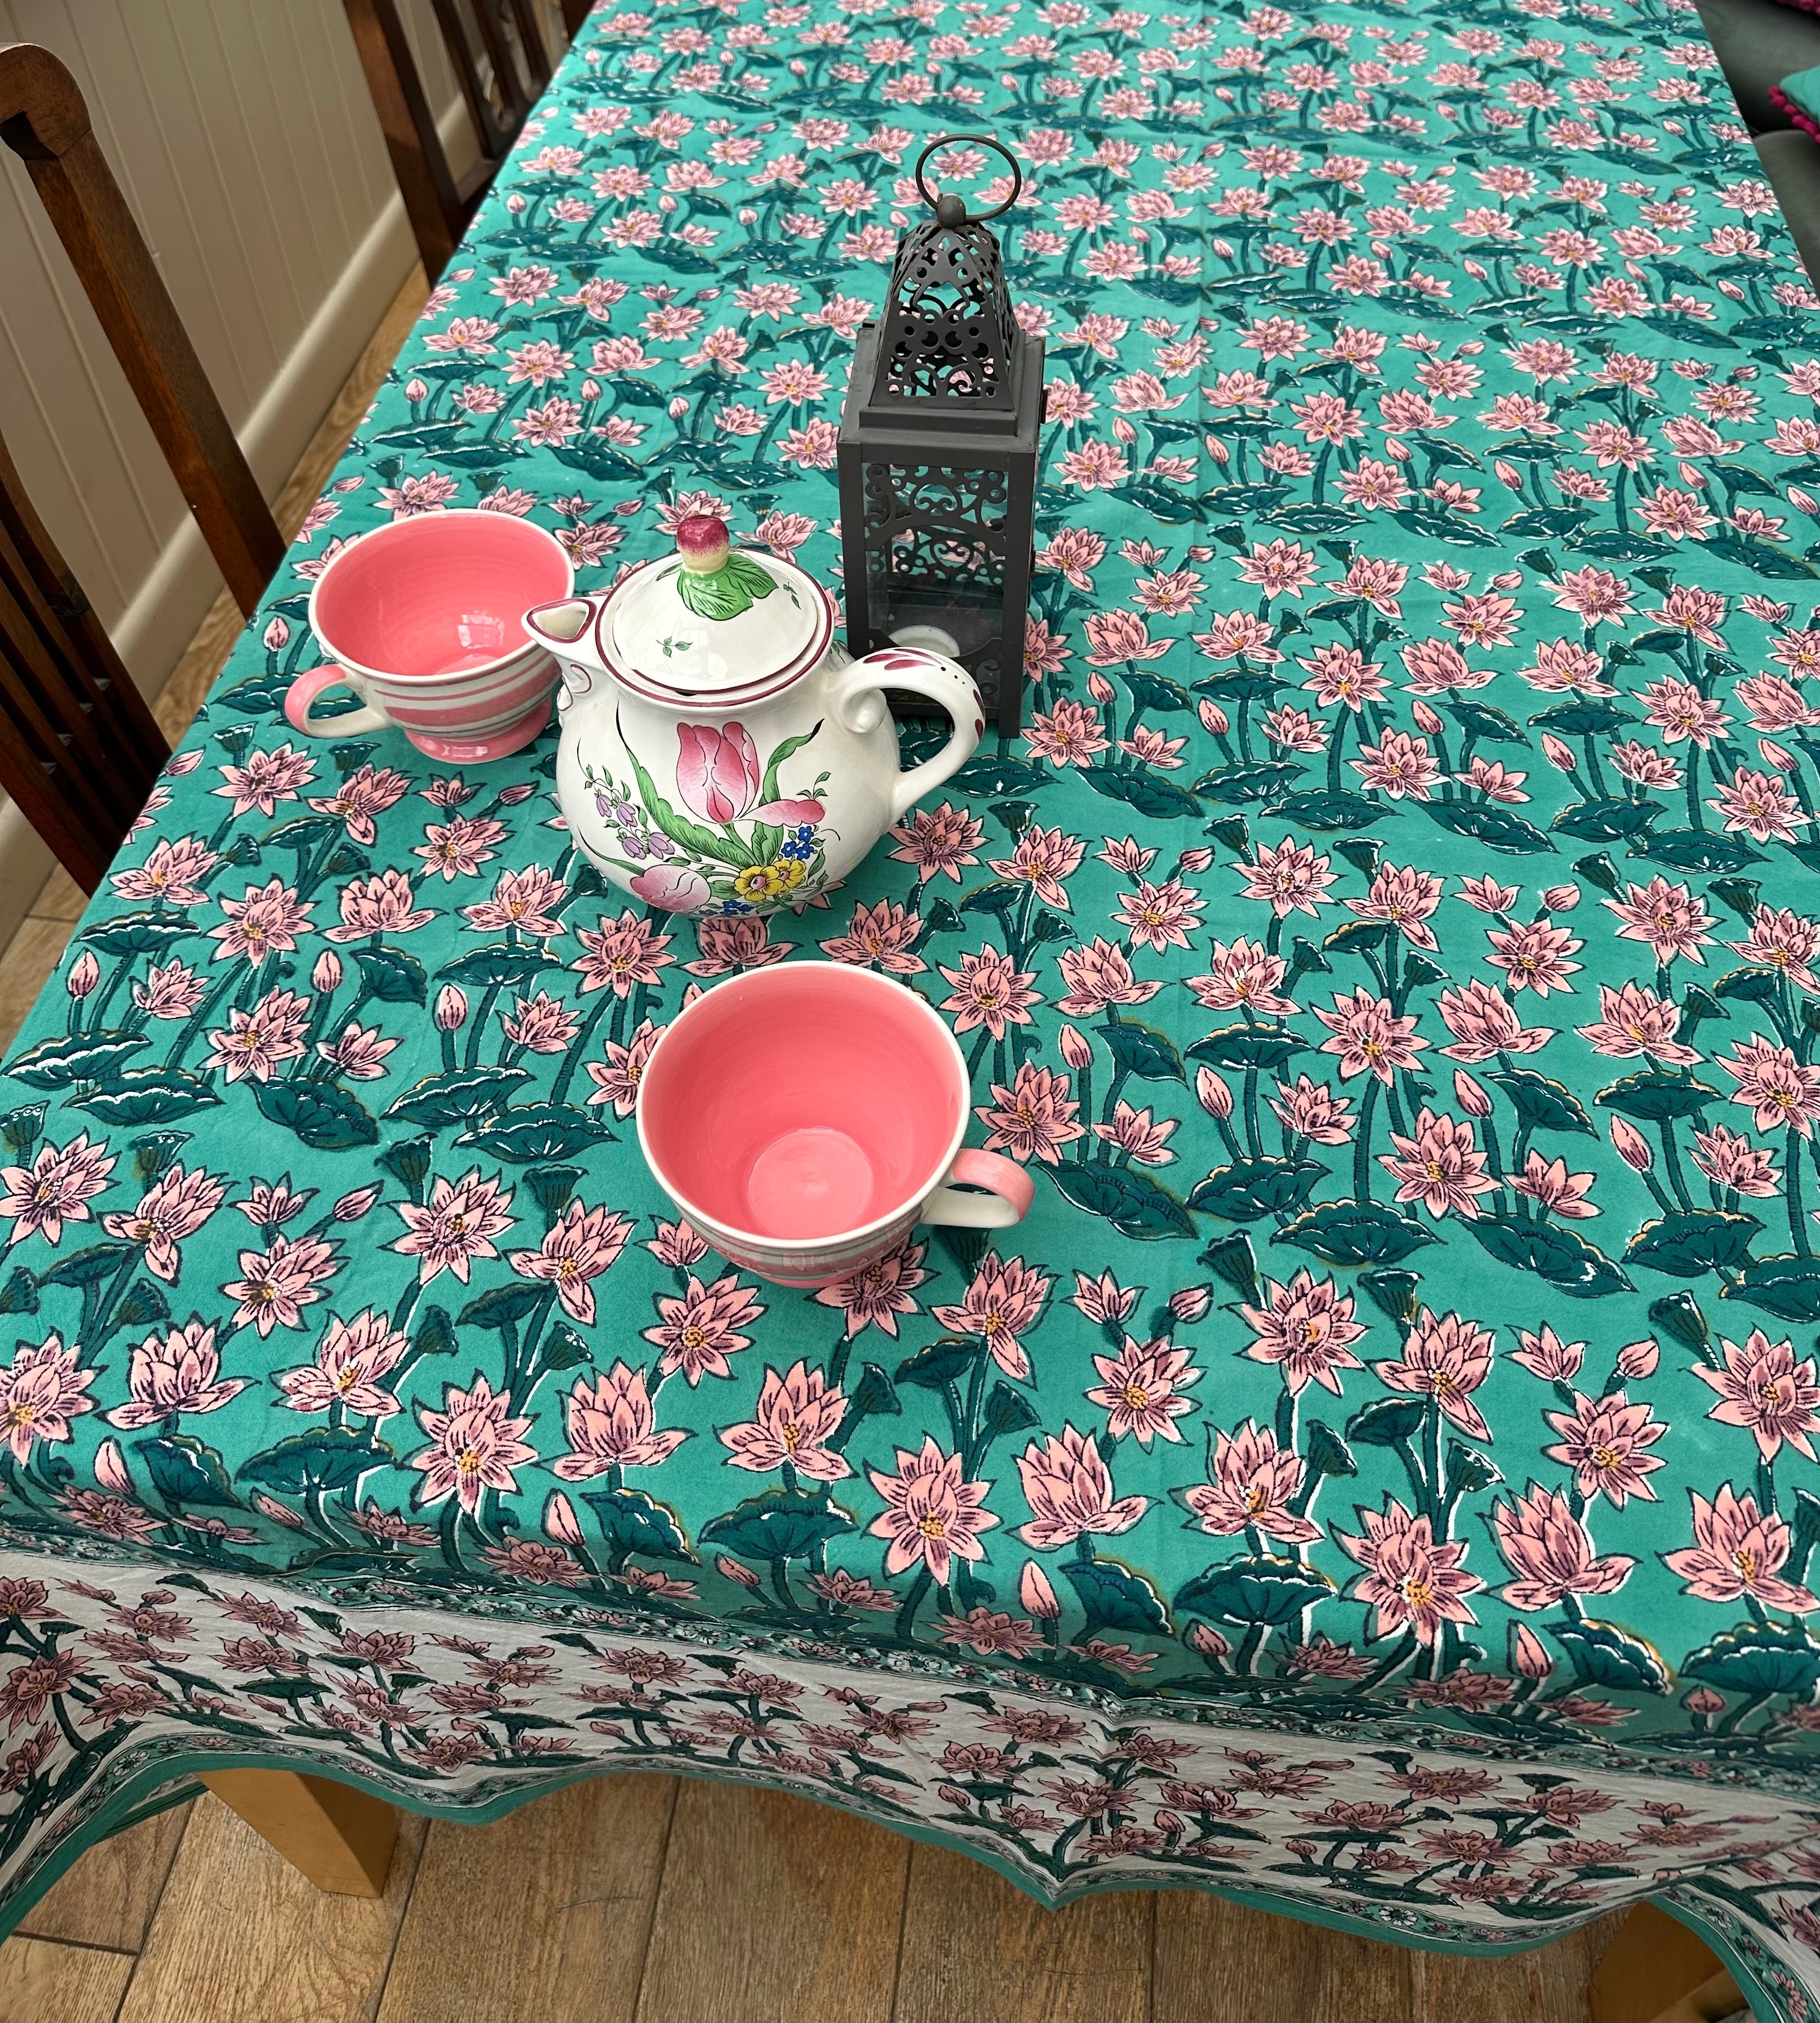 Anokhi Giverny Tablecloth